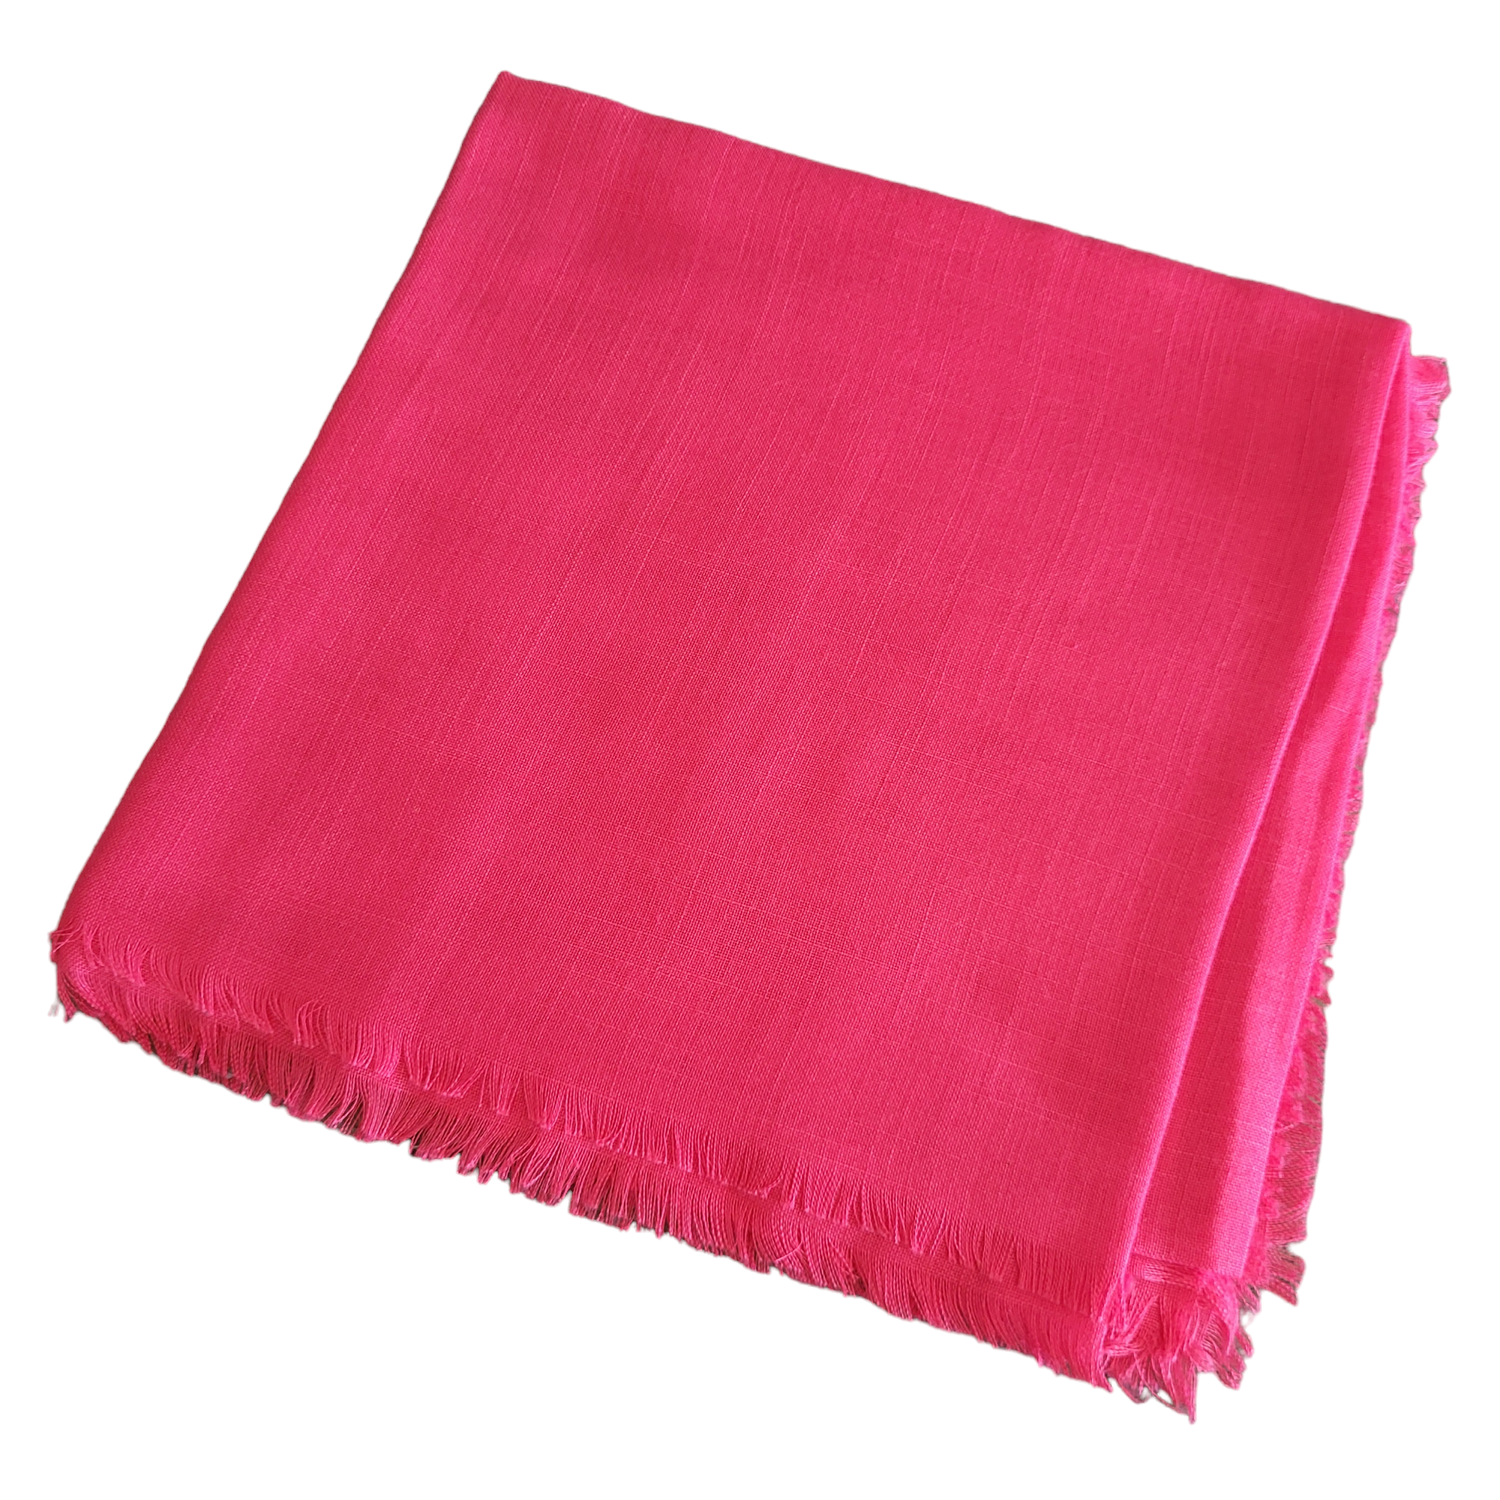 Solid soft fringed tichel - HOT pink